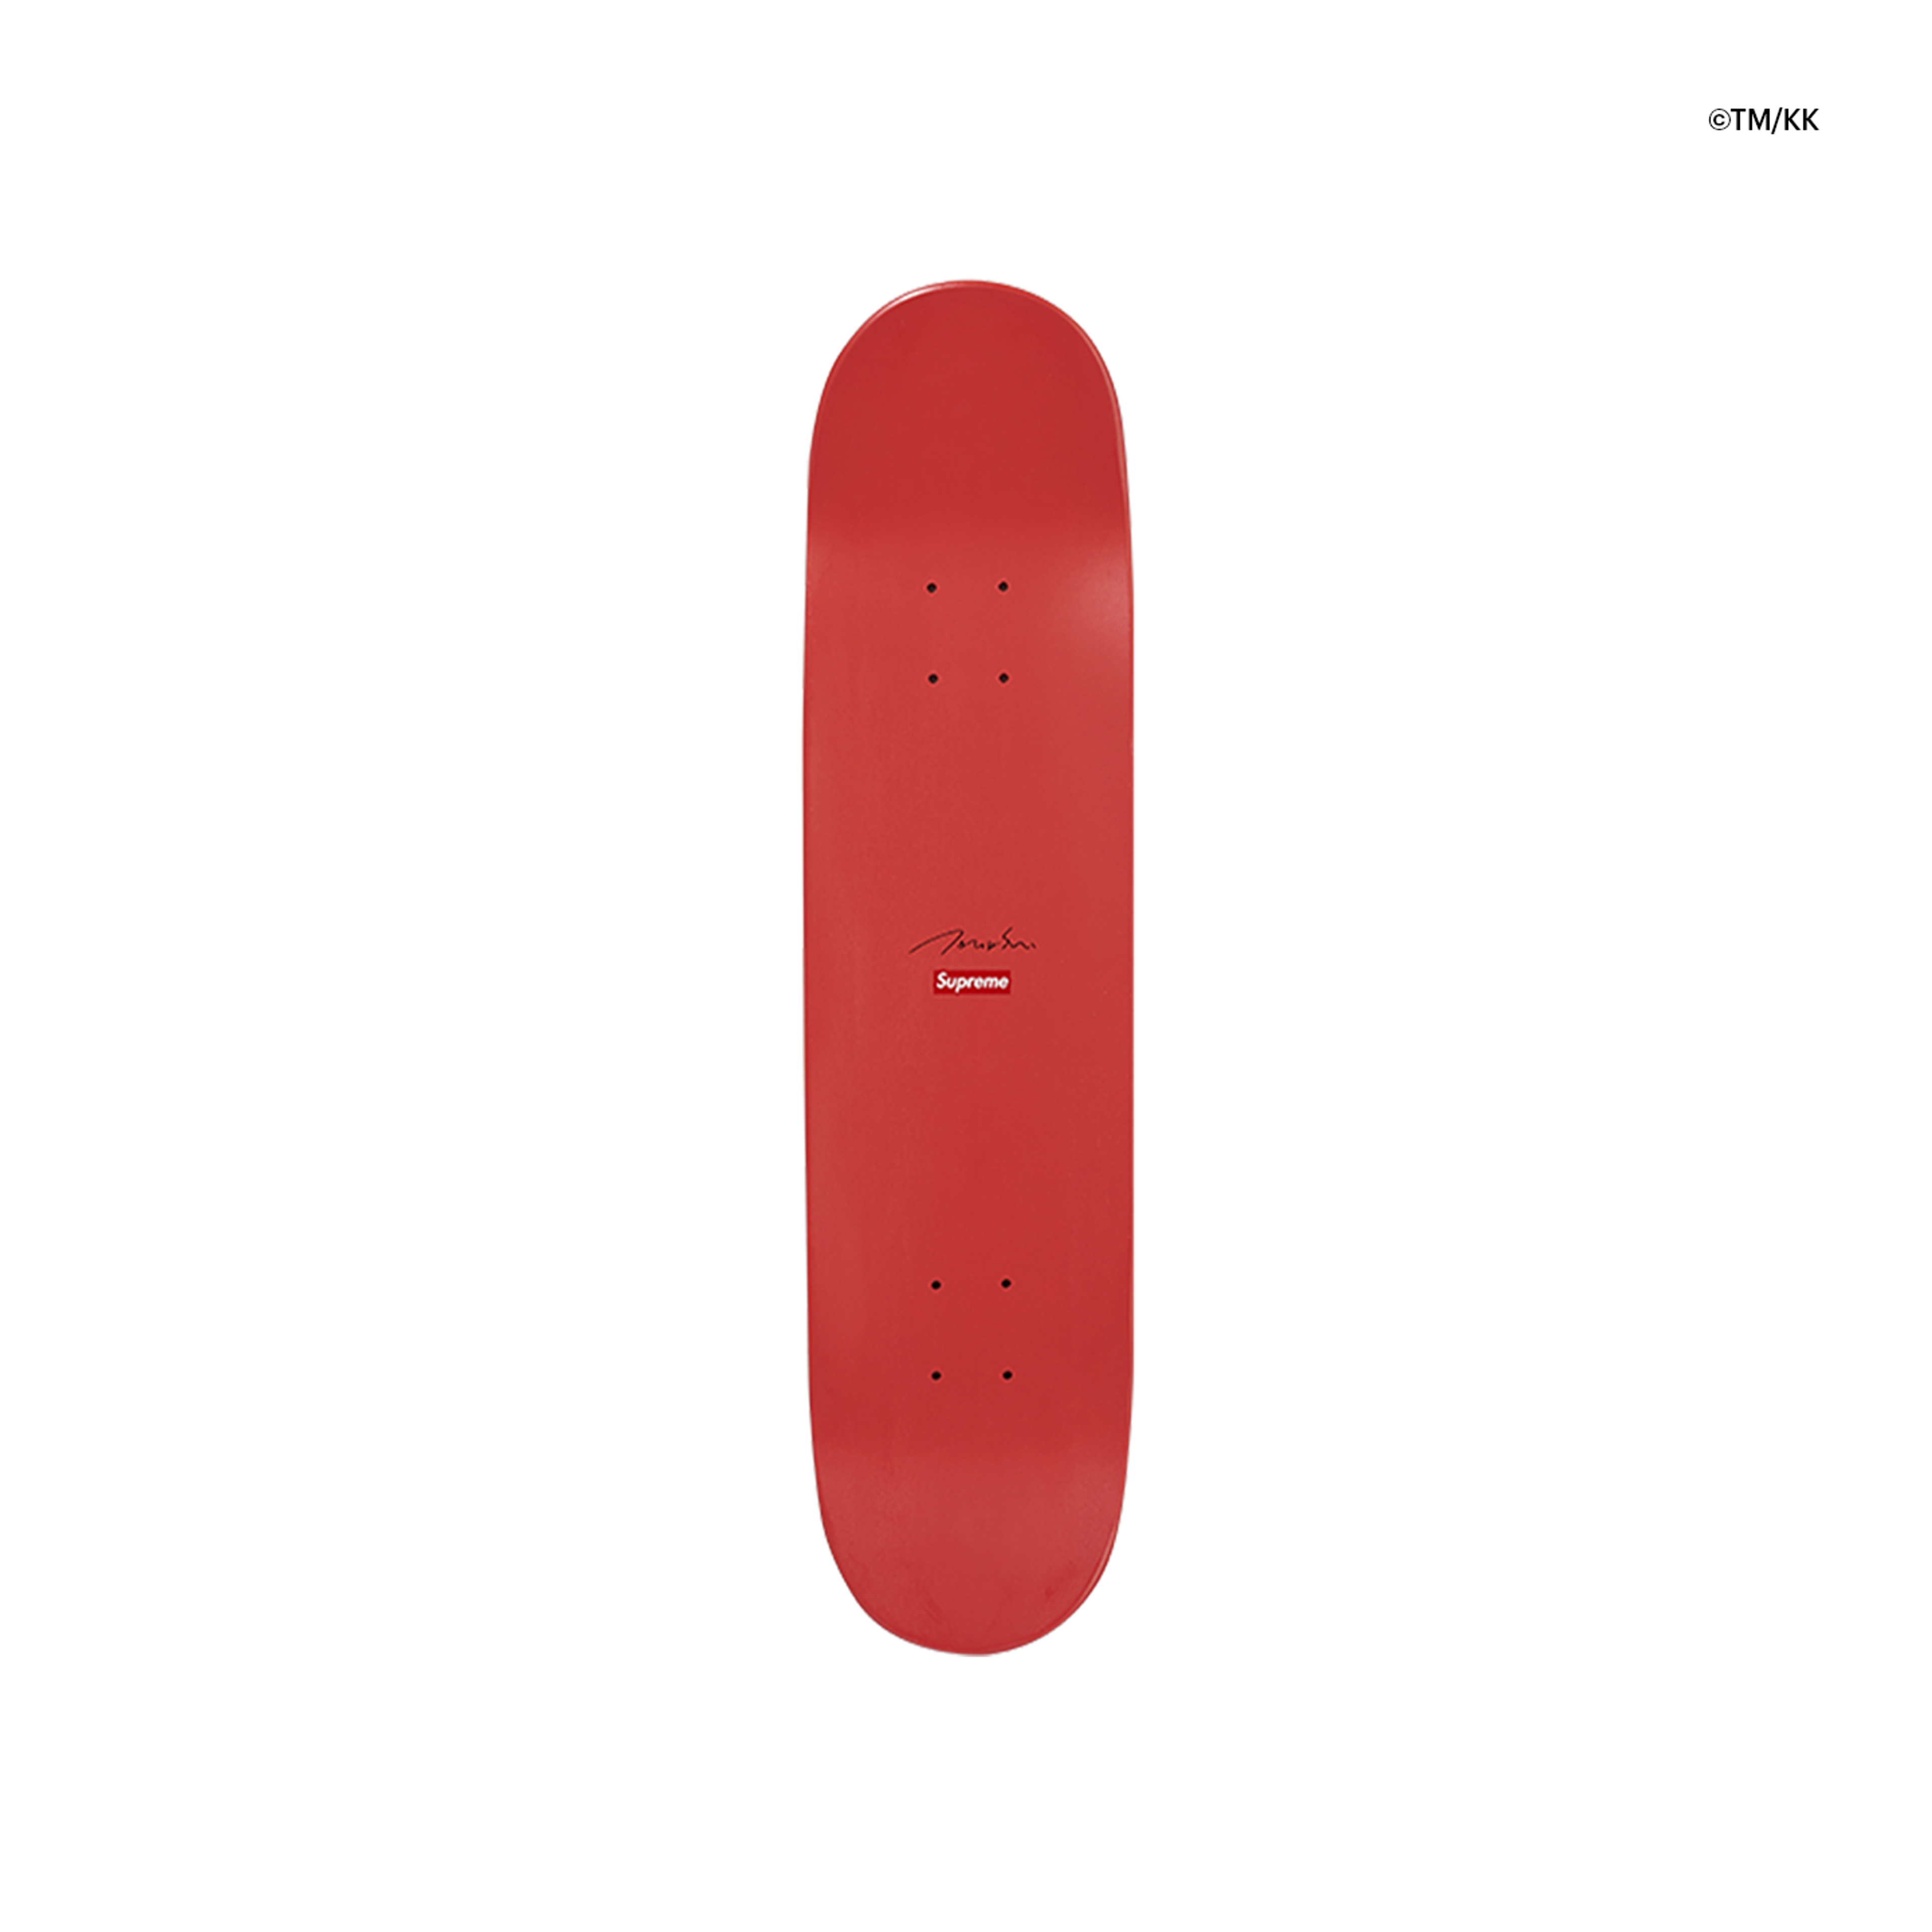 Alternate View 1 of Supreme x Takashi Murakami Ponchi-kun Skateboard (Red)